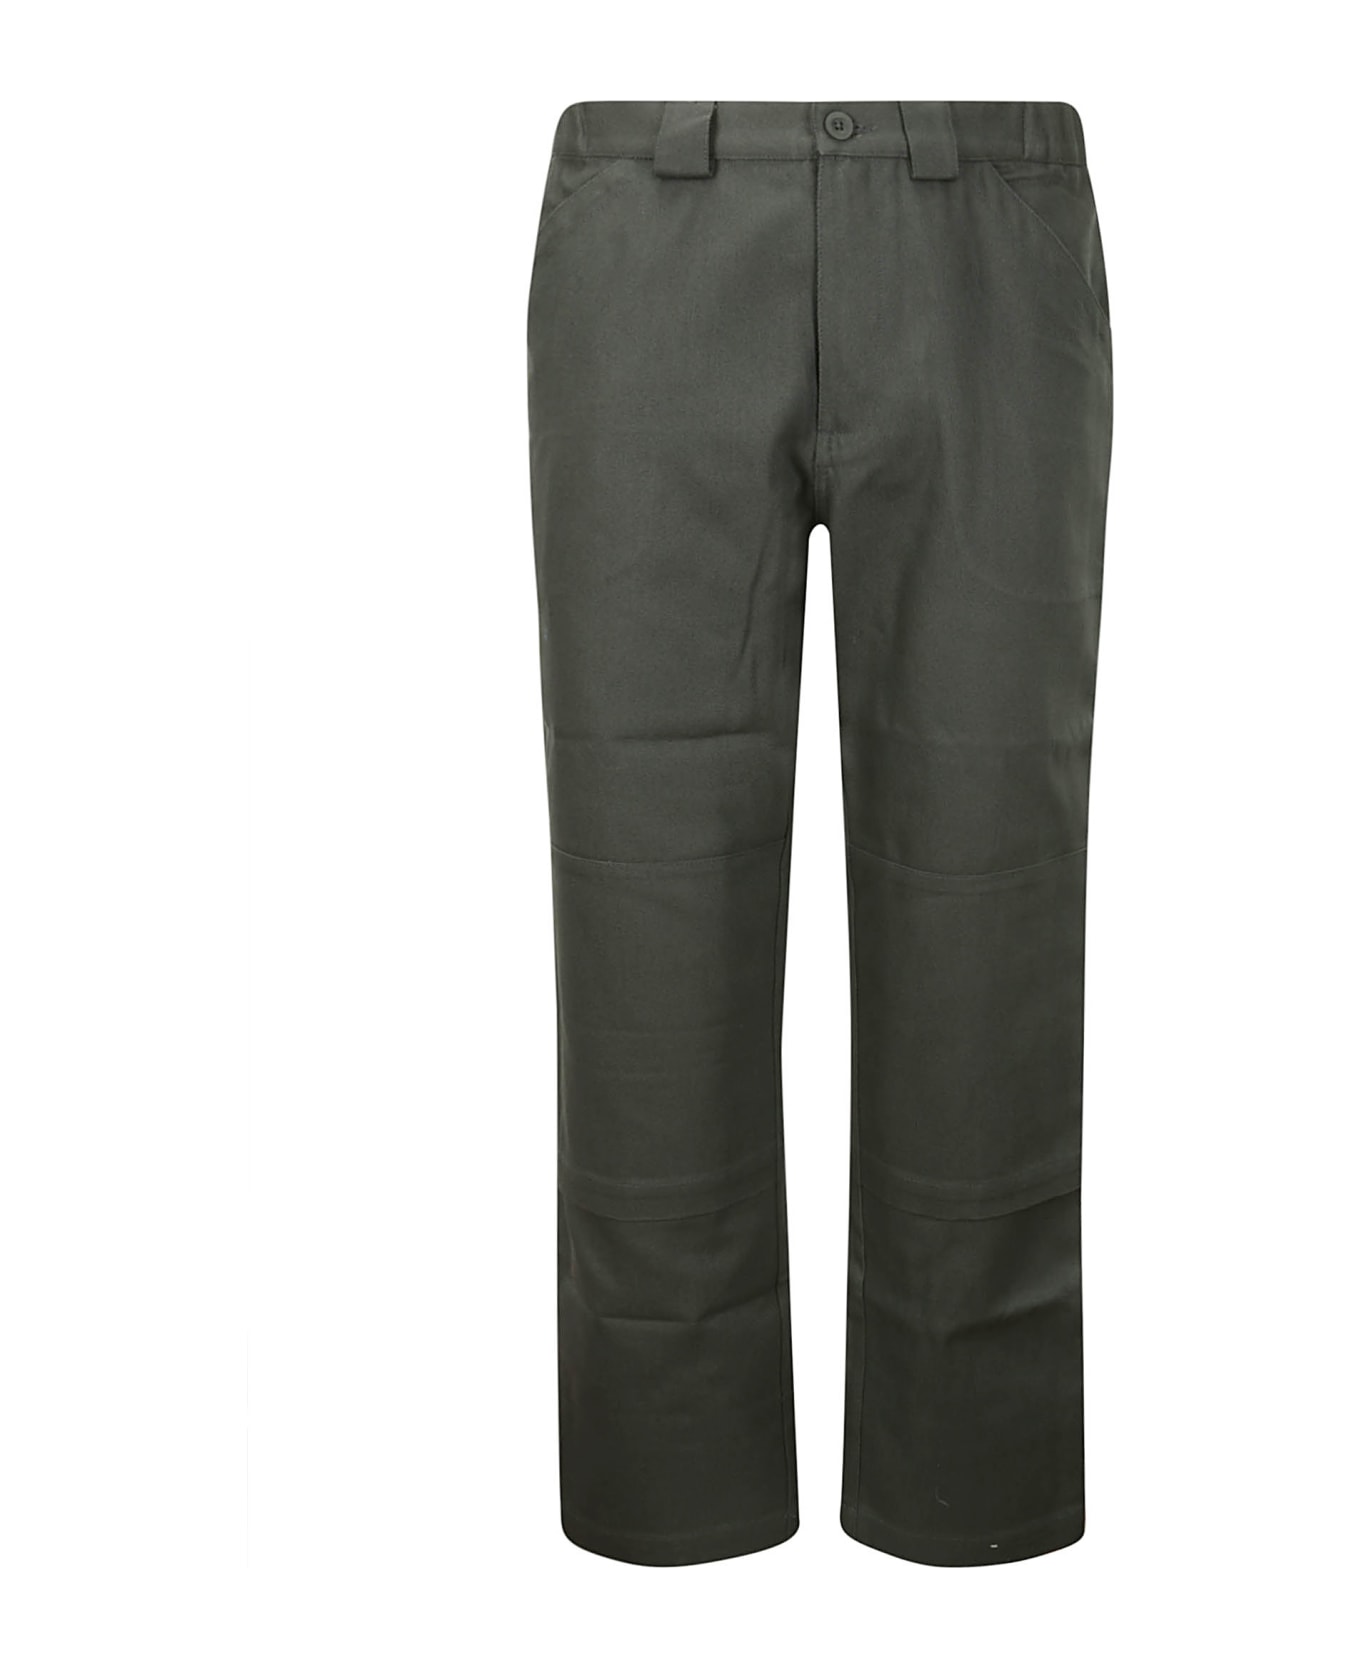 GR10K Replicated Pants - CONVOY GREY